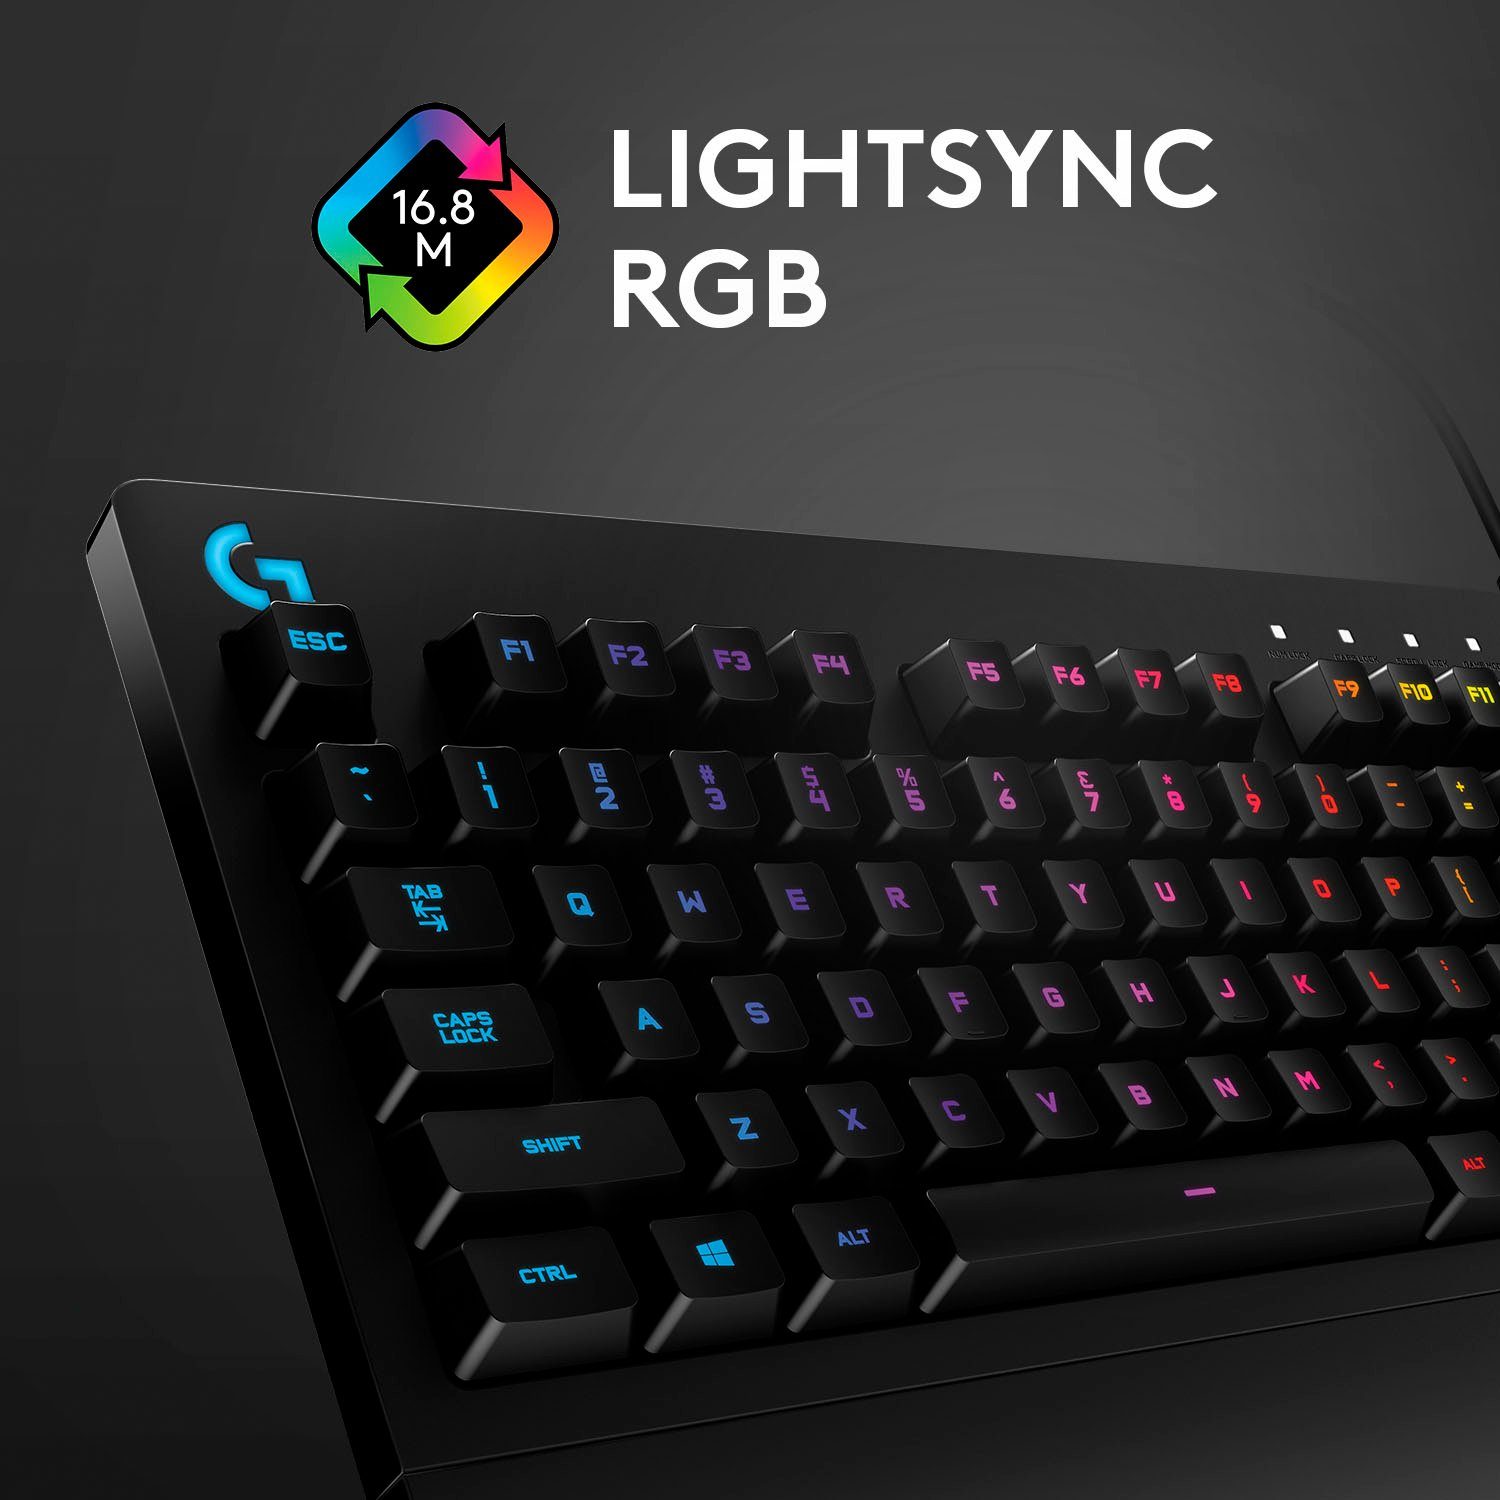 G G213 Logitech Gaming-Tastatur